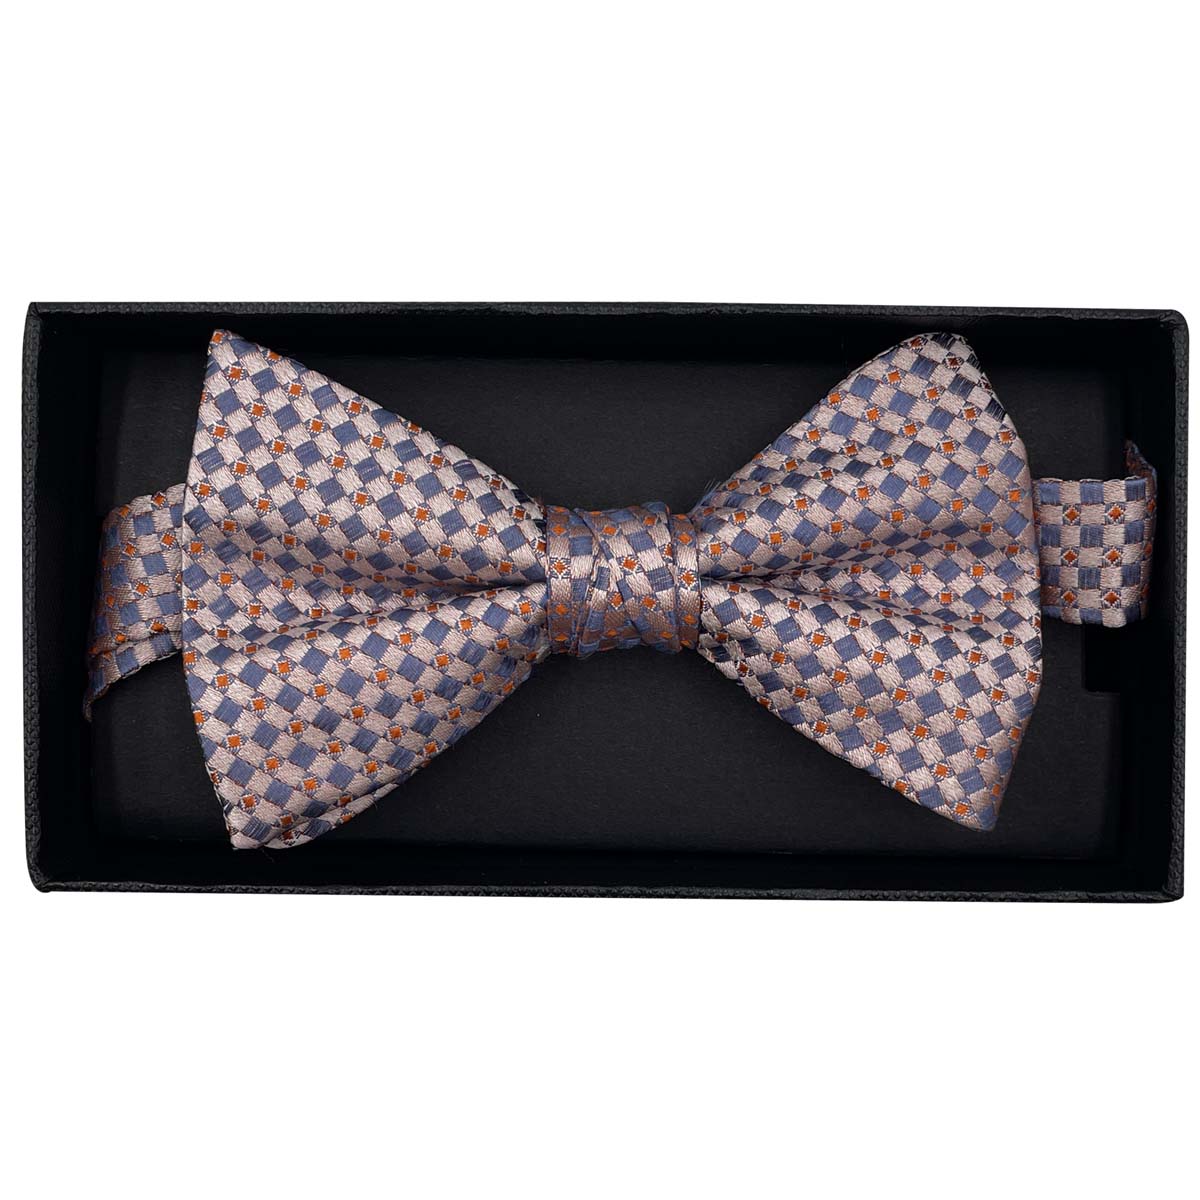 Bow tie - Grid print - Orange and Blue - Silk jacquard - Pre-tied - Men - Draeger